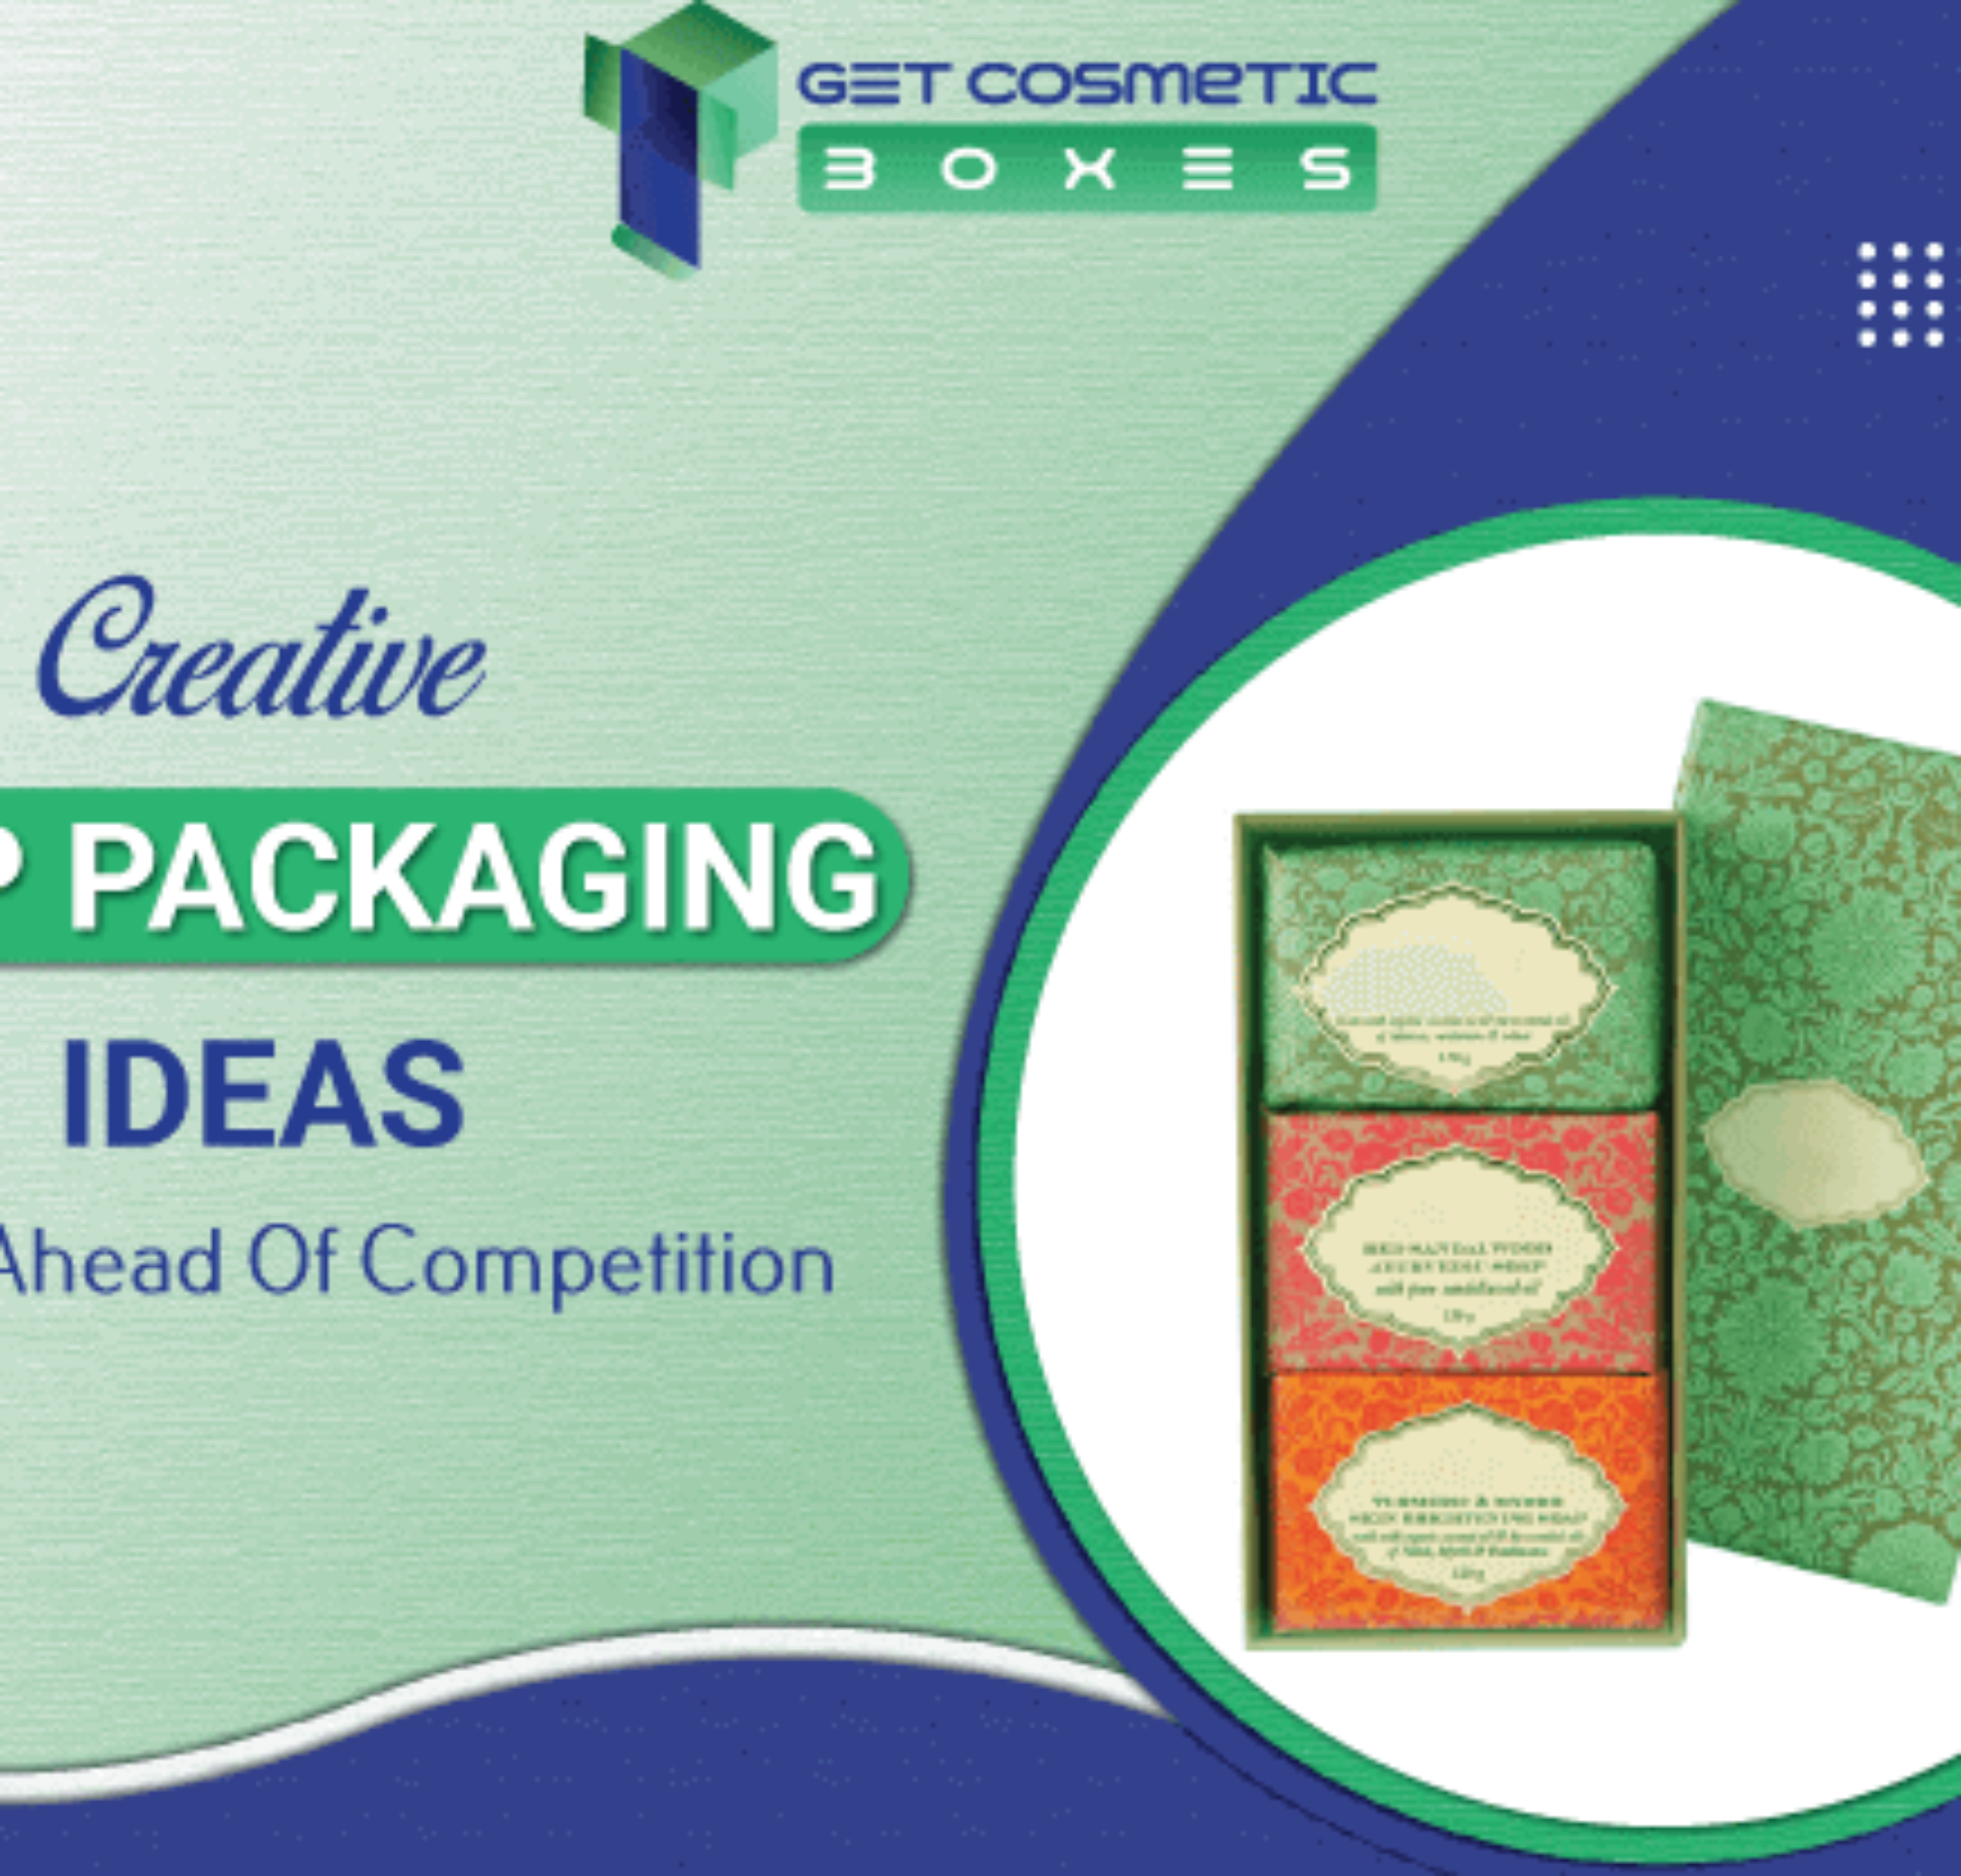 Creative Soap Packaging Ideas